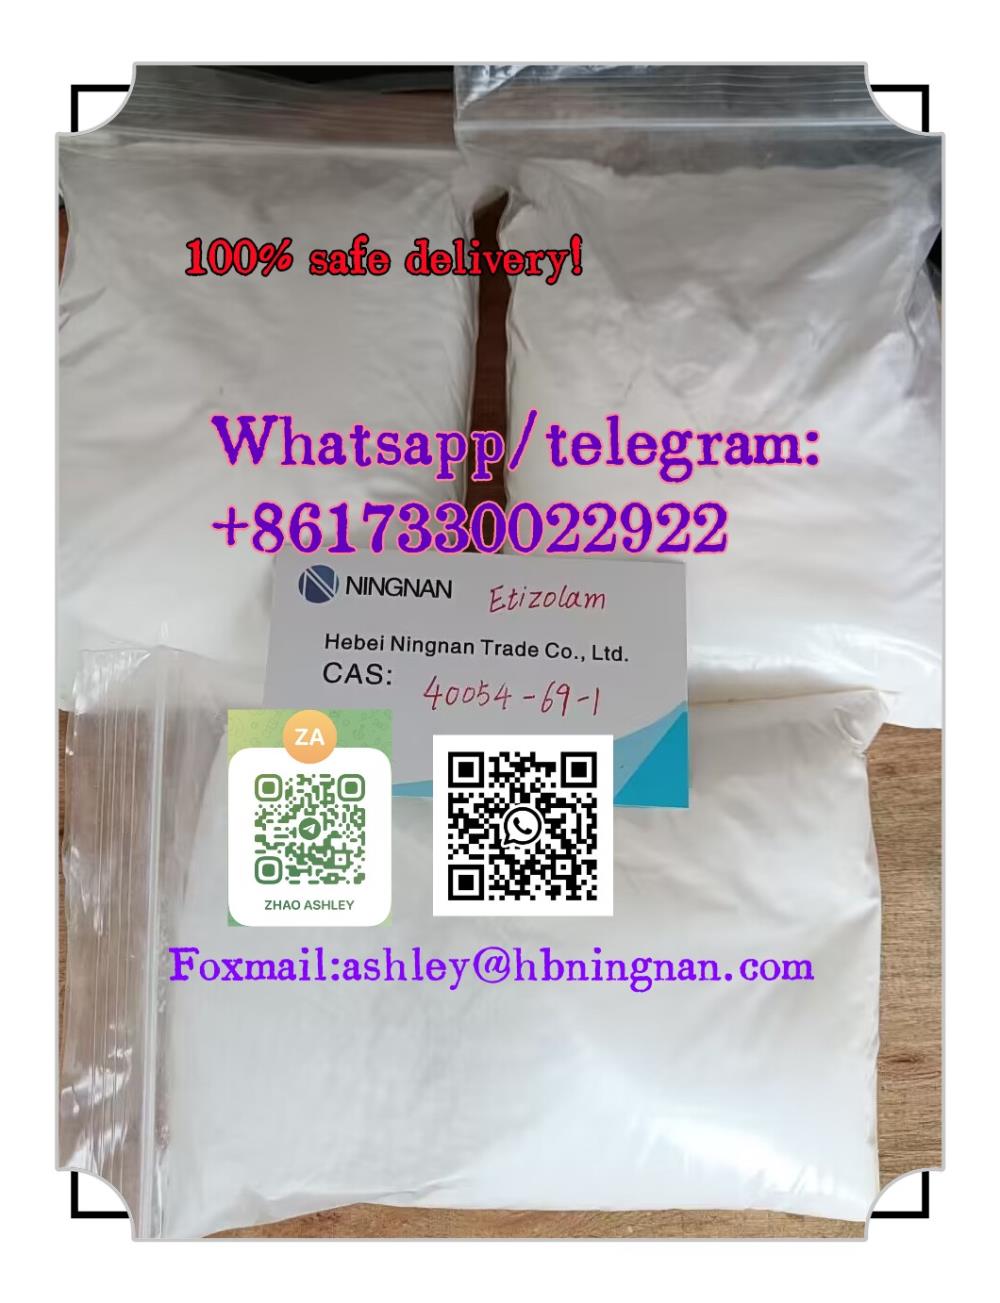 cas 40054-69-1   Etizolam High quality Organic Chemicals ,40054-69-1   Etizolam,ningnan ,Electrical and Power Generation/Batteries